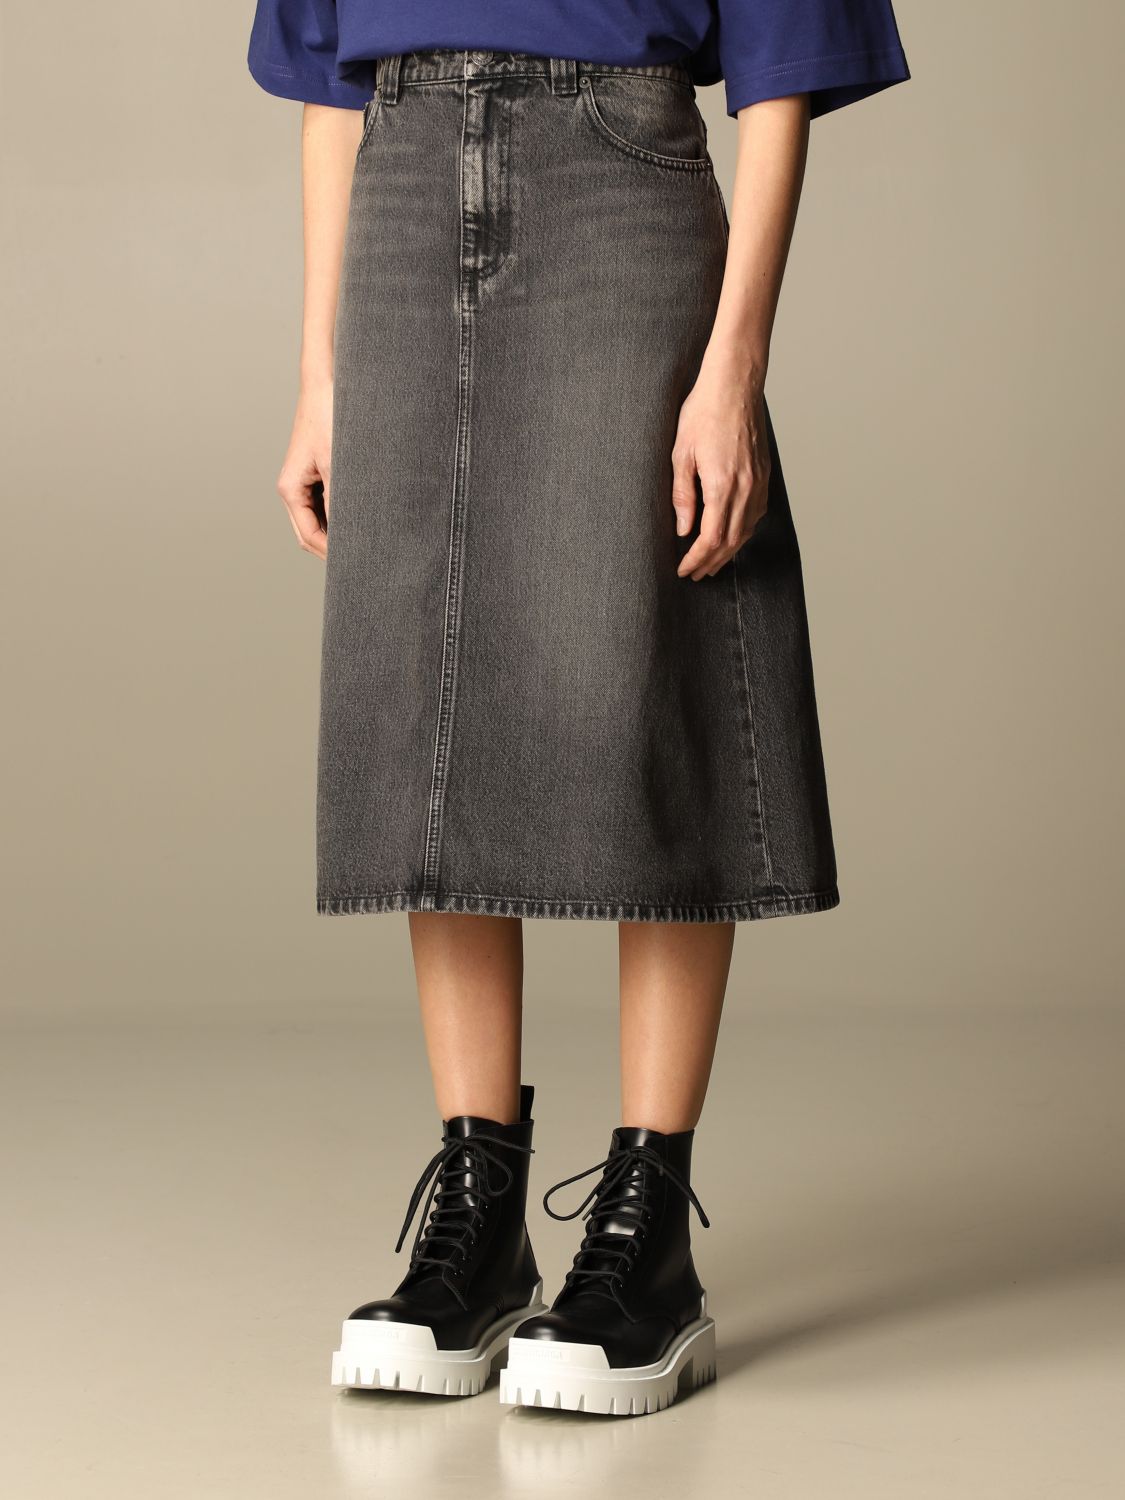 Balenciaga Outlet: denim skirt in used denim Black | Balenciaga skirt 646913 TBP47 online at GIGLIO.COM